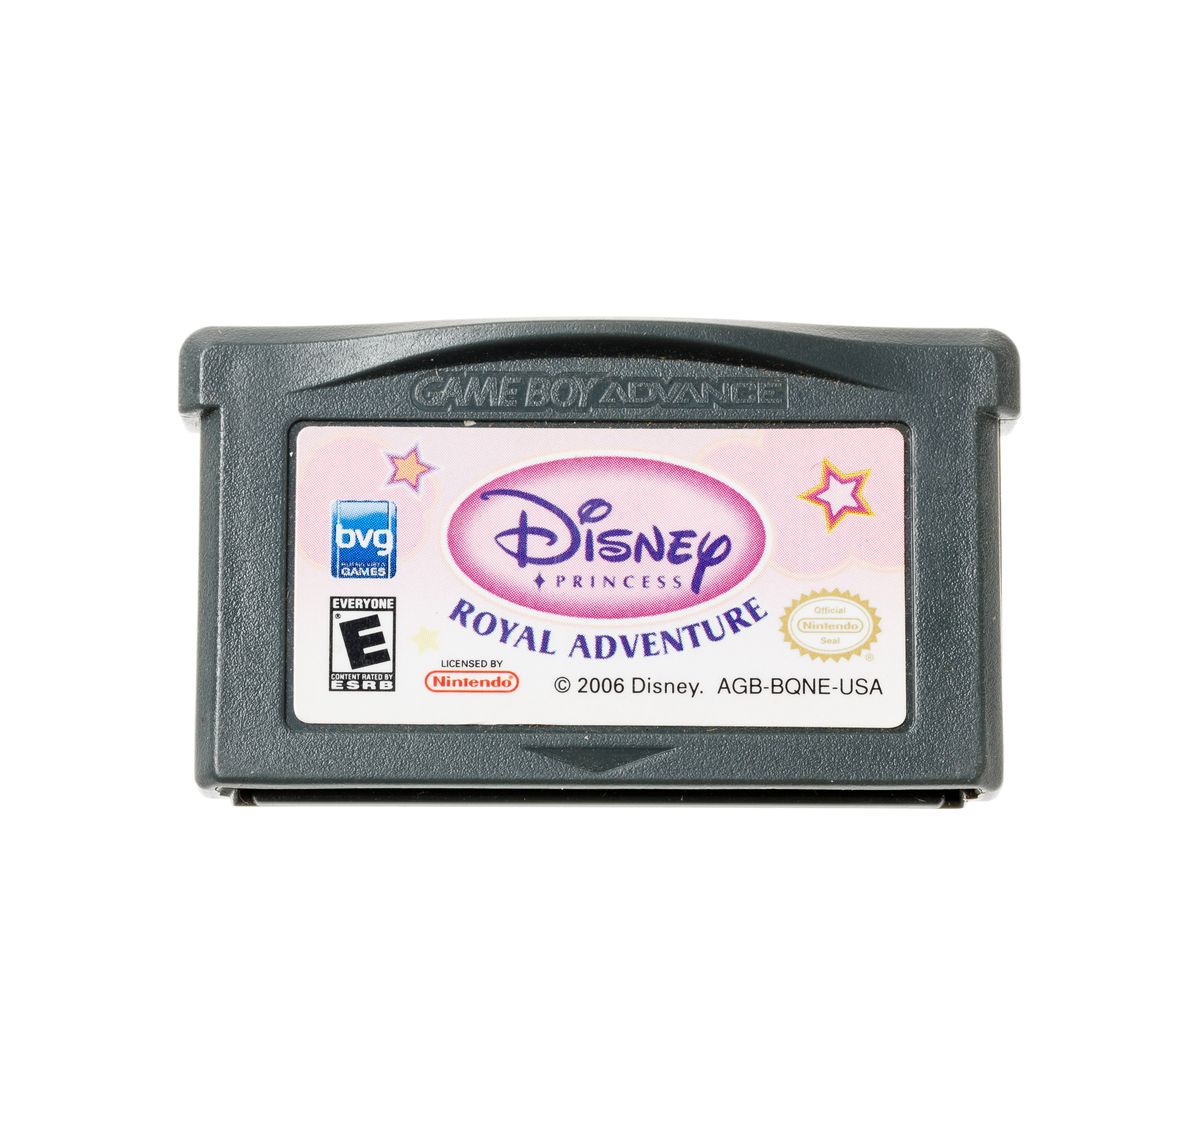 Disney Princess Royal Adventure Kopen | Gameboy Advance Games